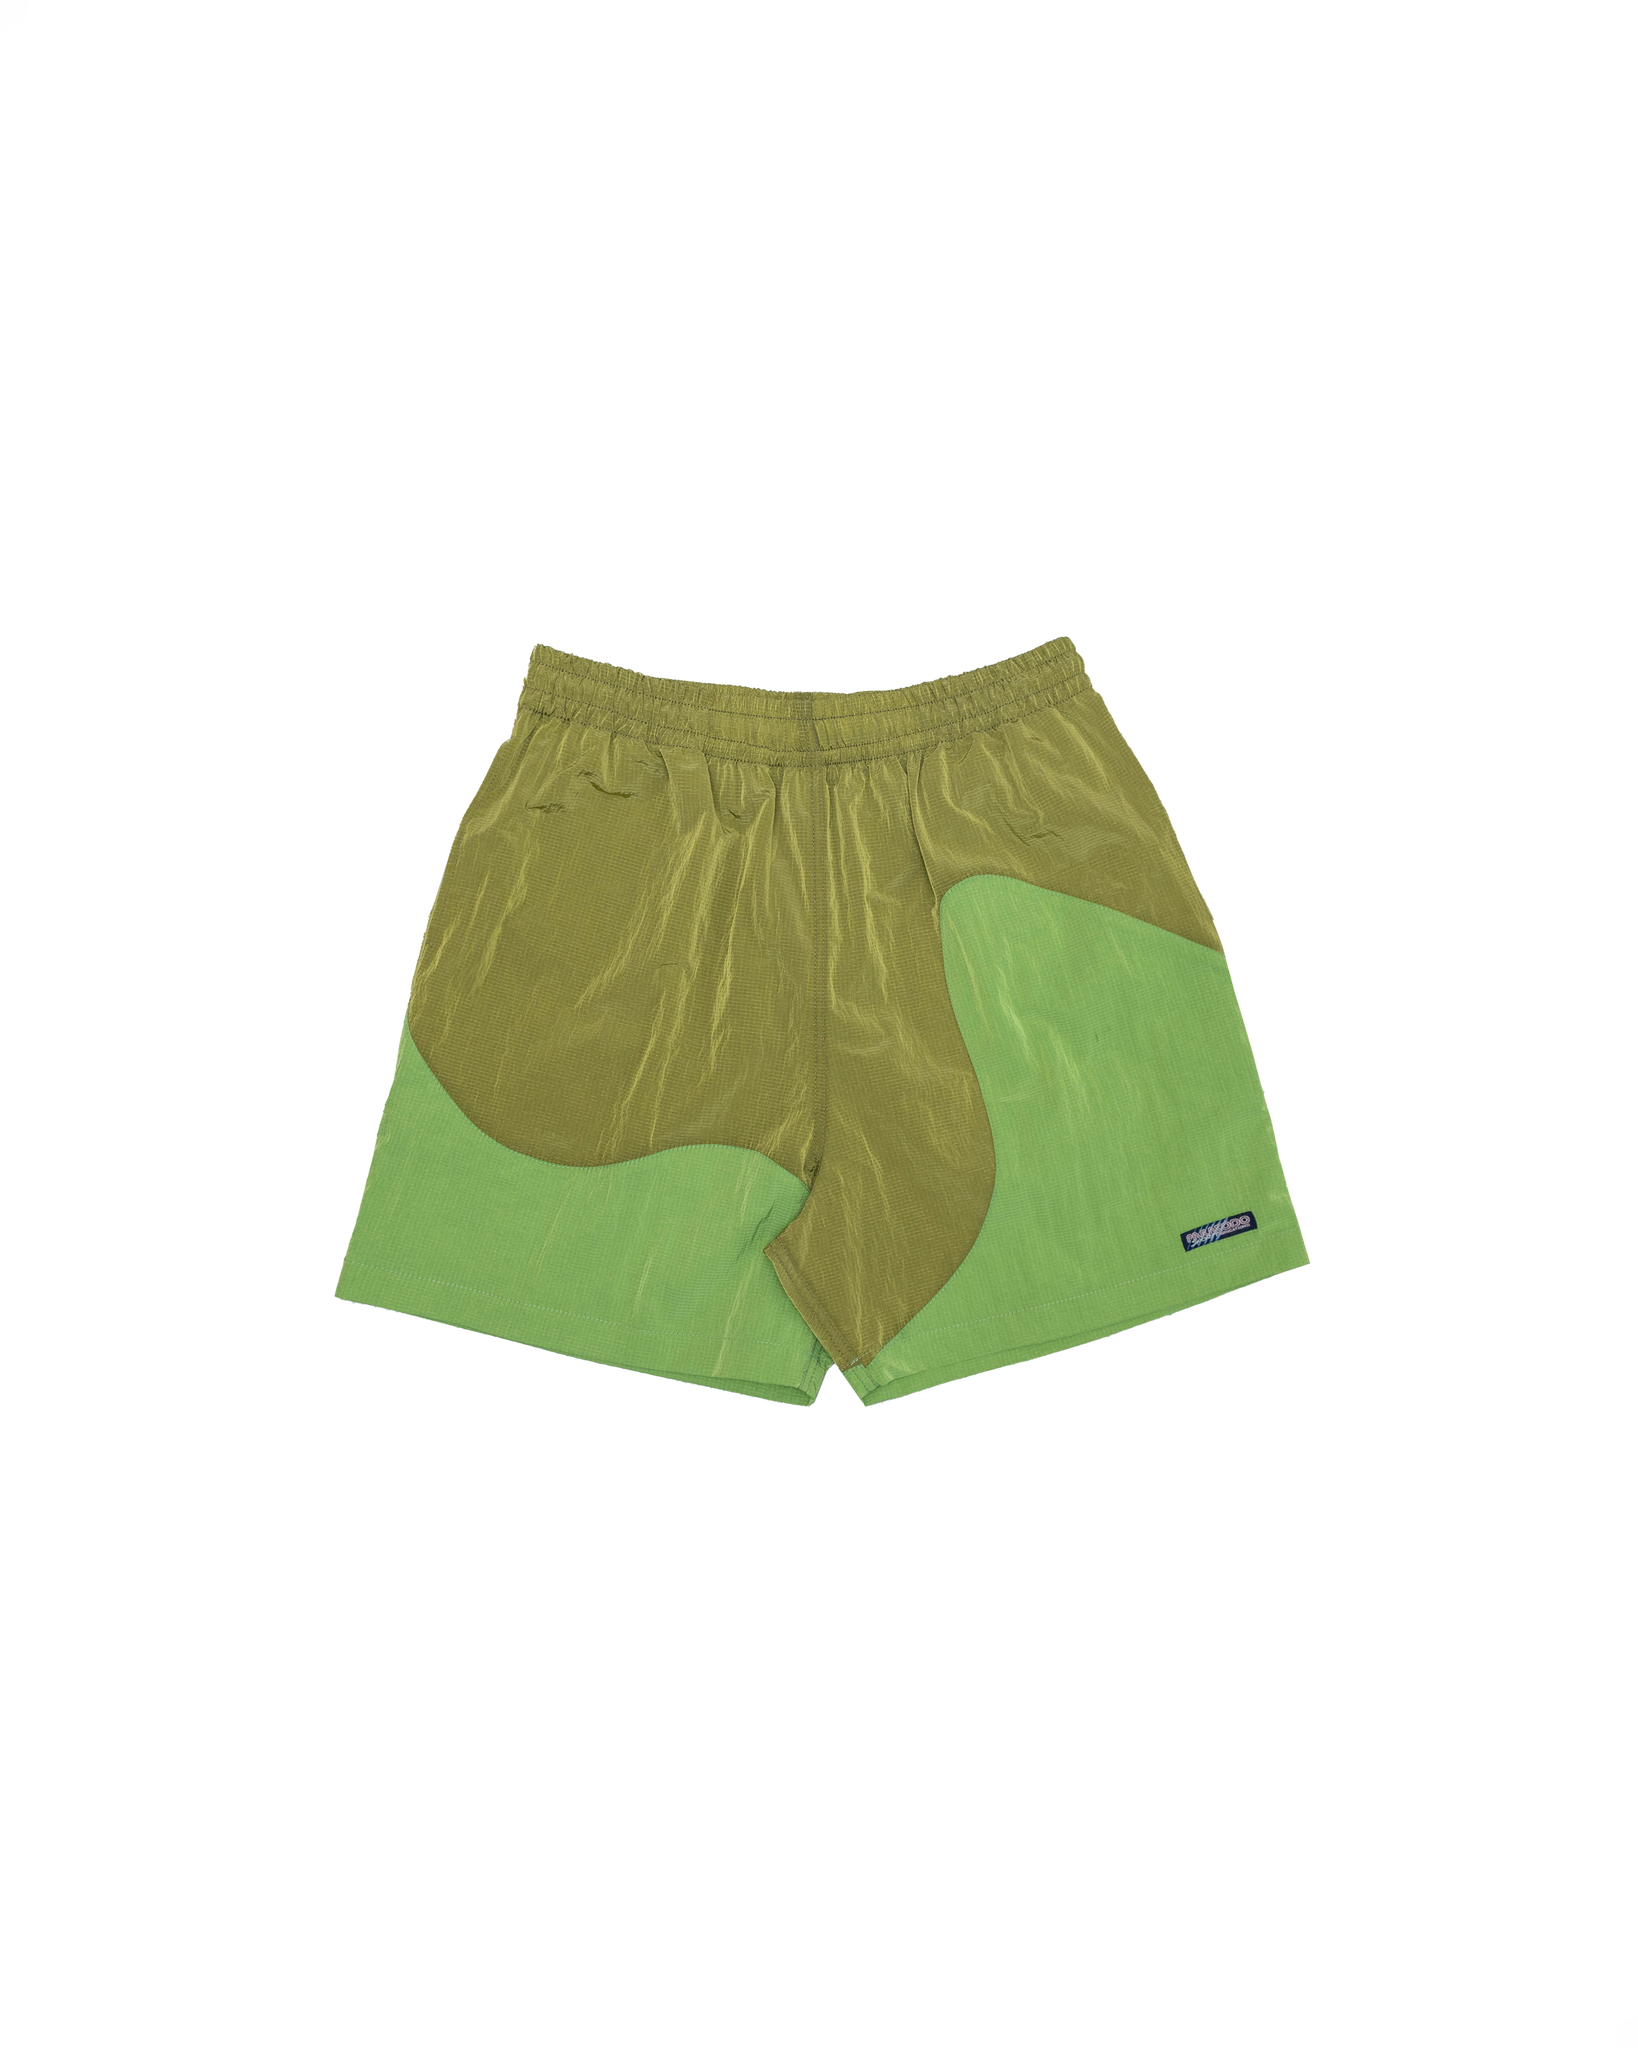 Onda Shorts: Avocado/Lime